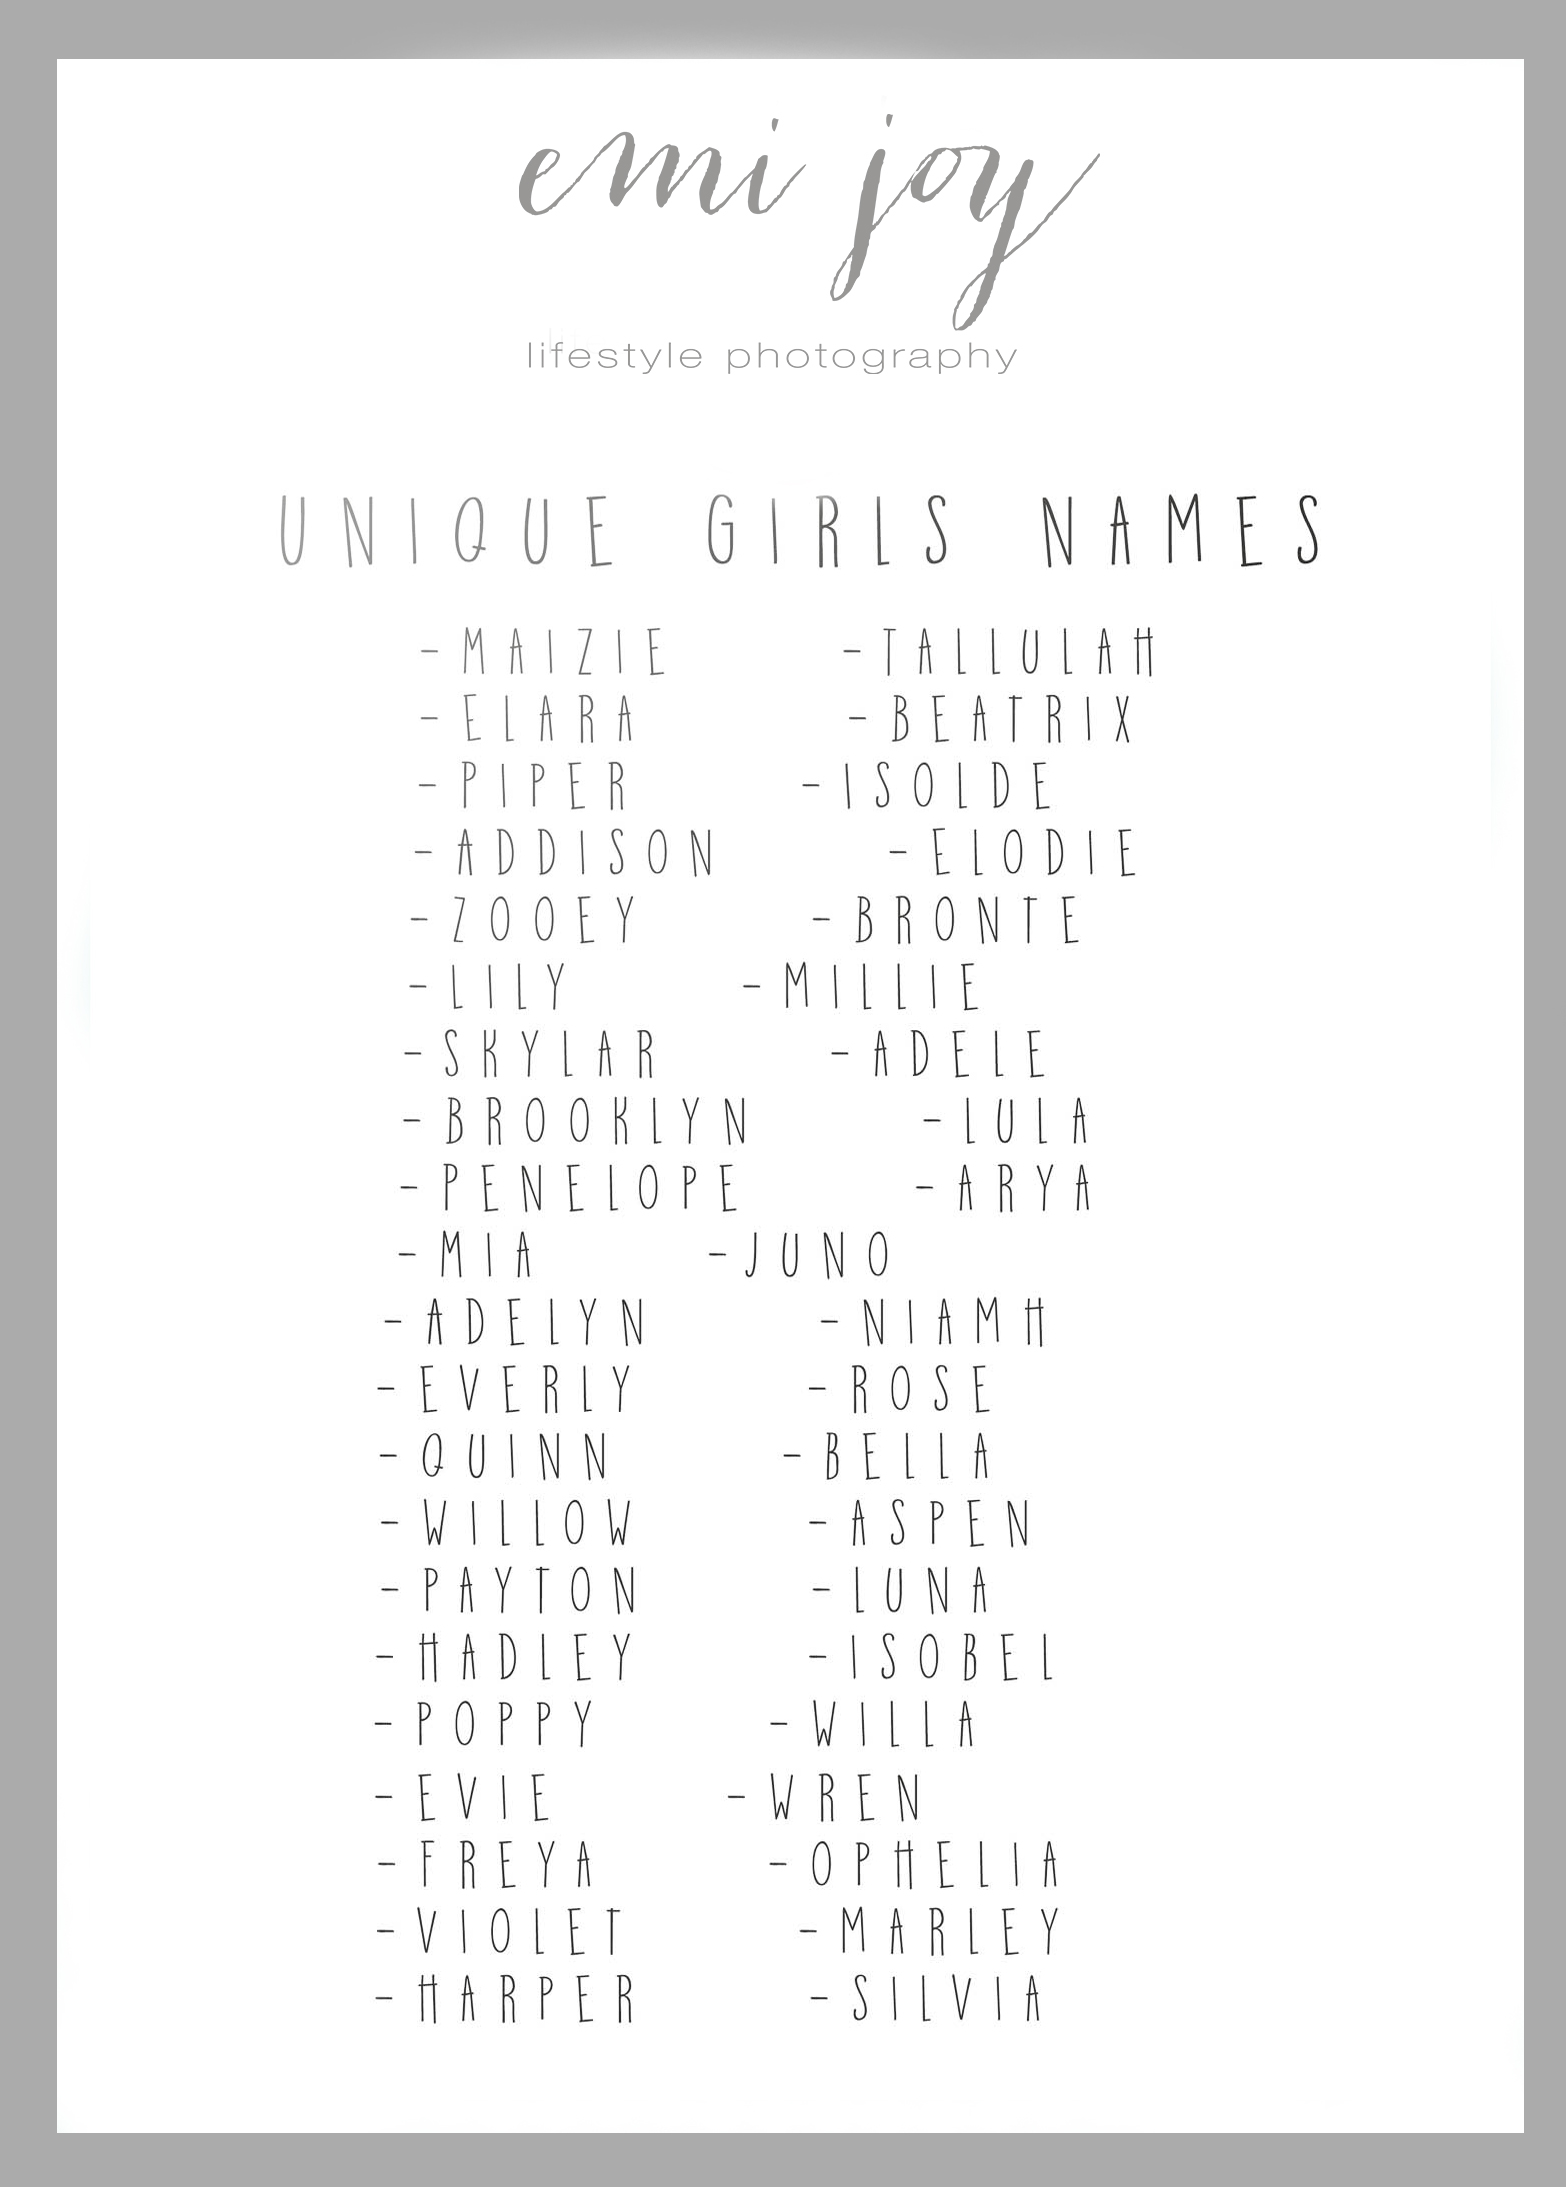 Most unique girl names - ilhon